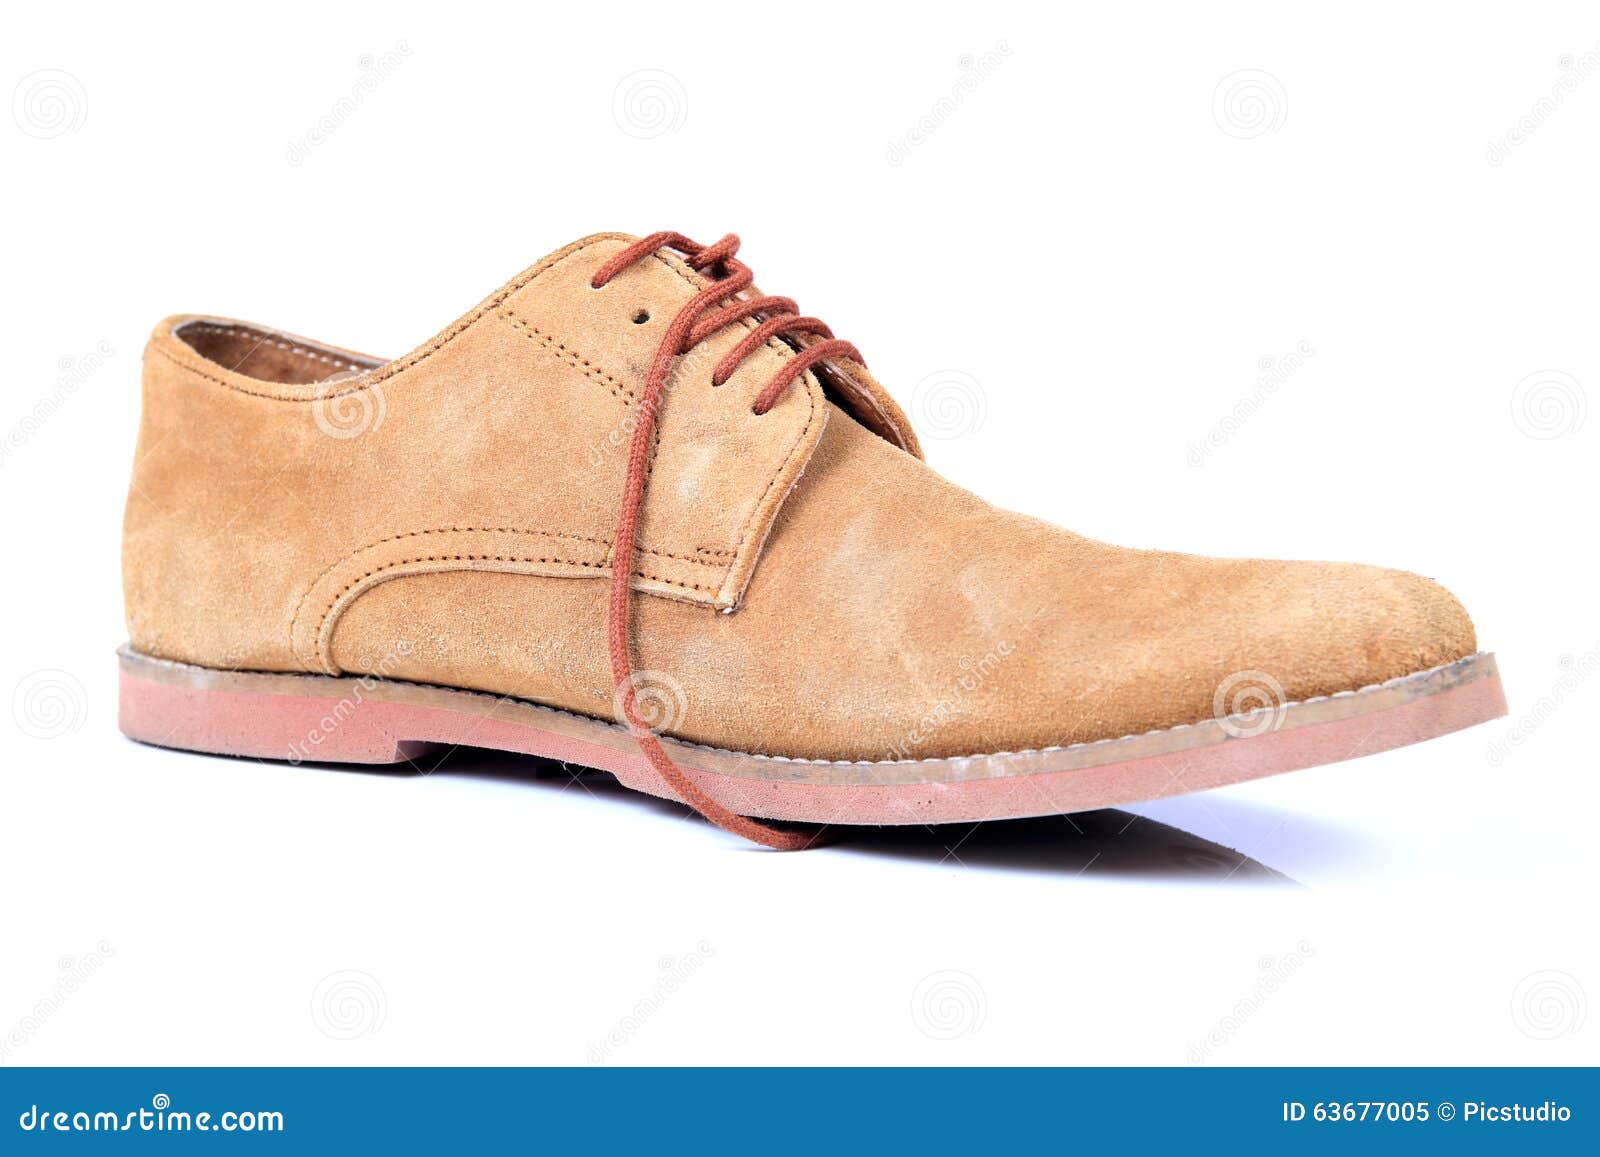 Zapato Semi-formal imagen archivo. Imagen de artesanal - 63677005